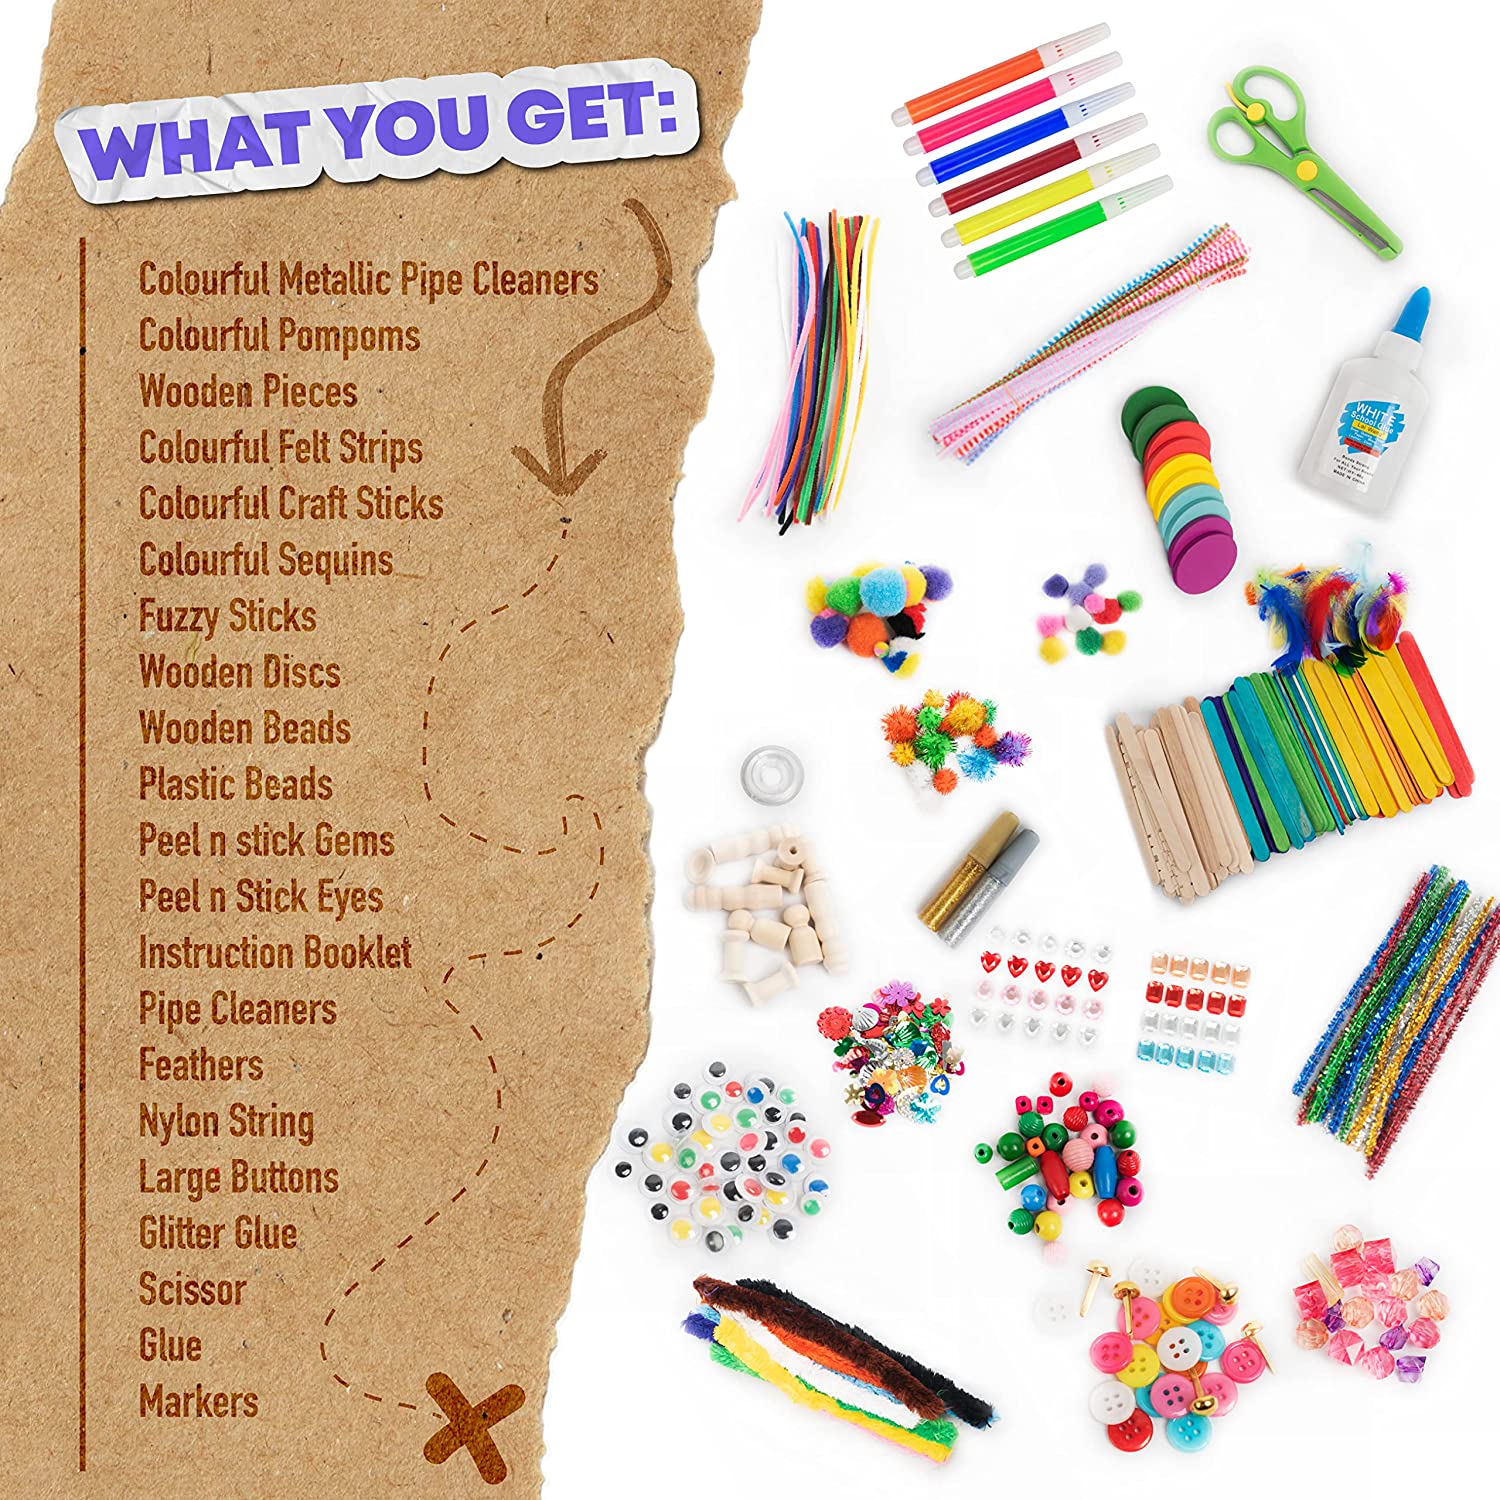 Arts & Crafts Themed Kids Party – Craft Box Girls